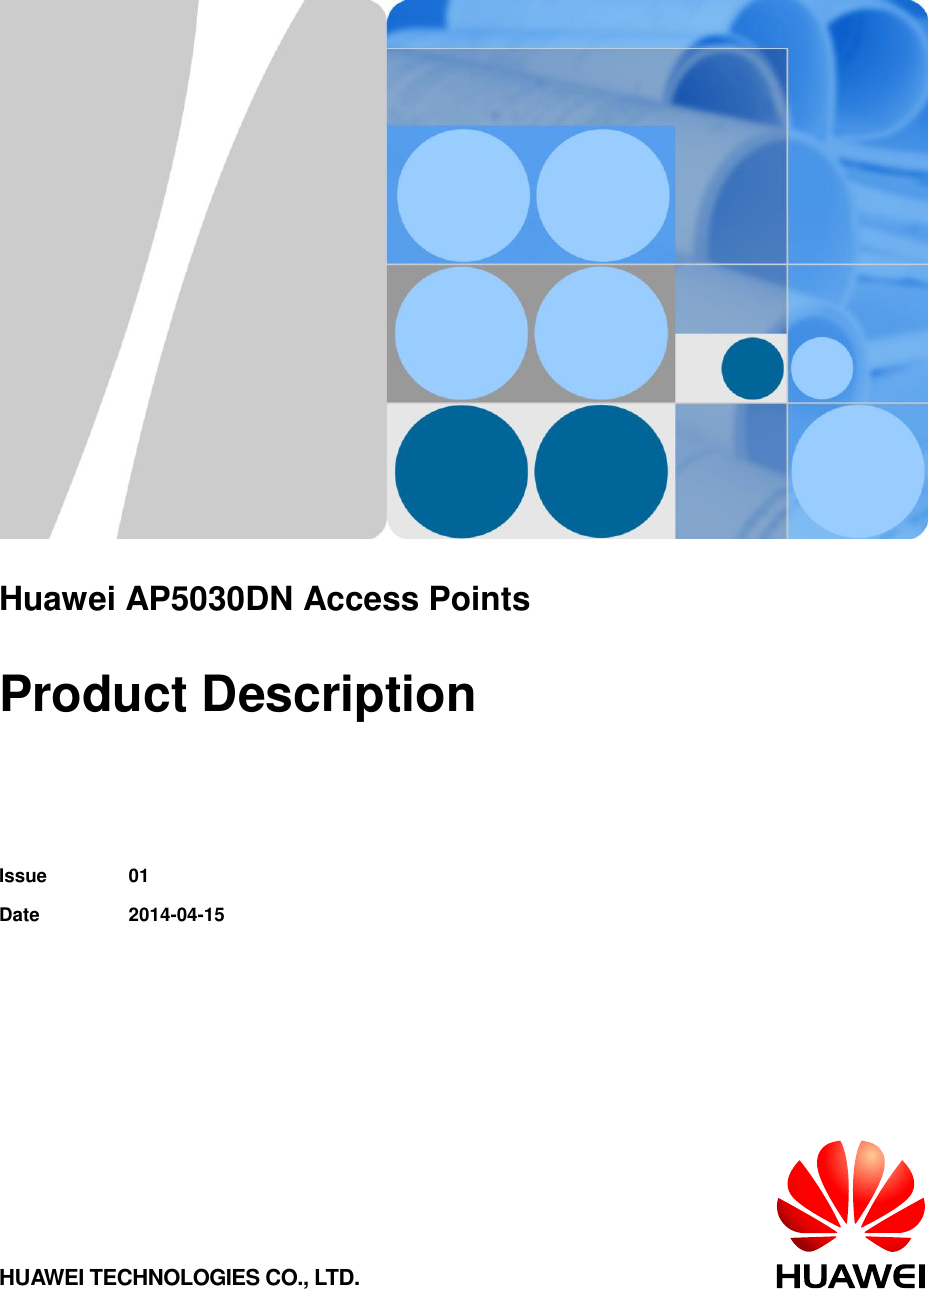         Huawei AP5030DN Access Points  Product Description   Issue 01 Date 2014-04-15 HUAWEI TECHNOLOGIES CO., LTD. 